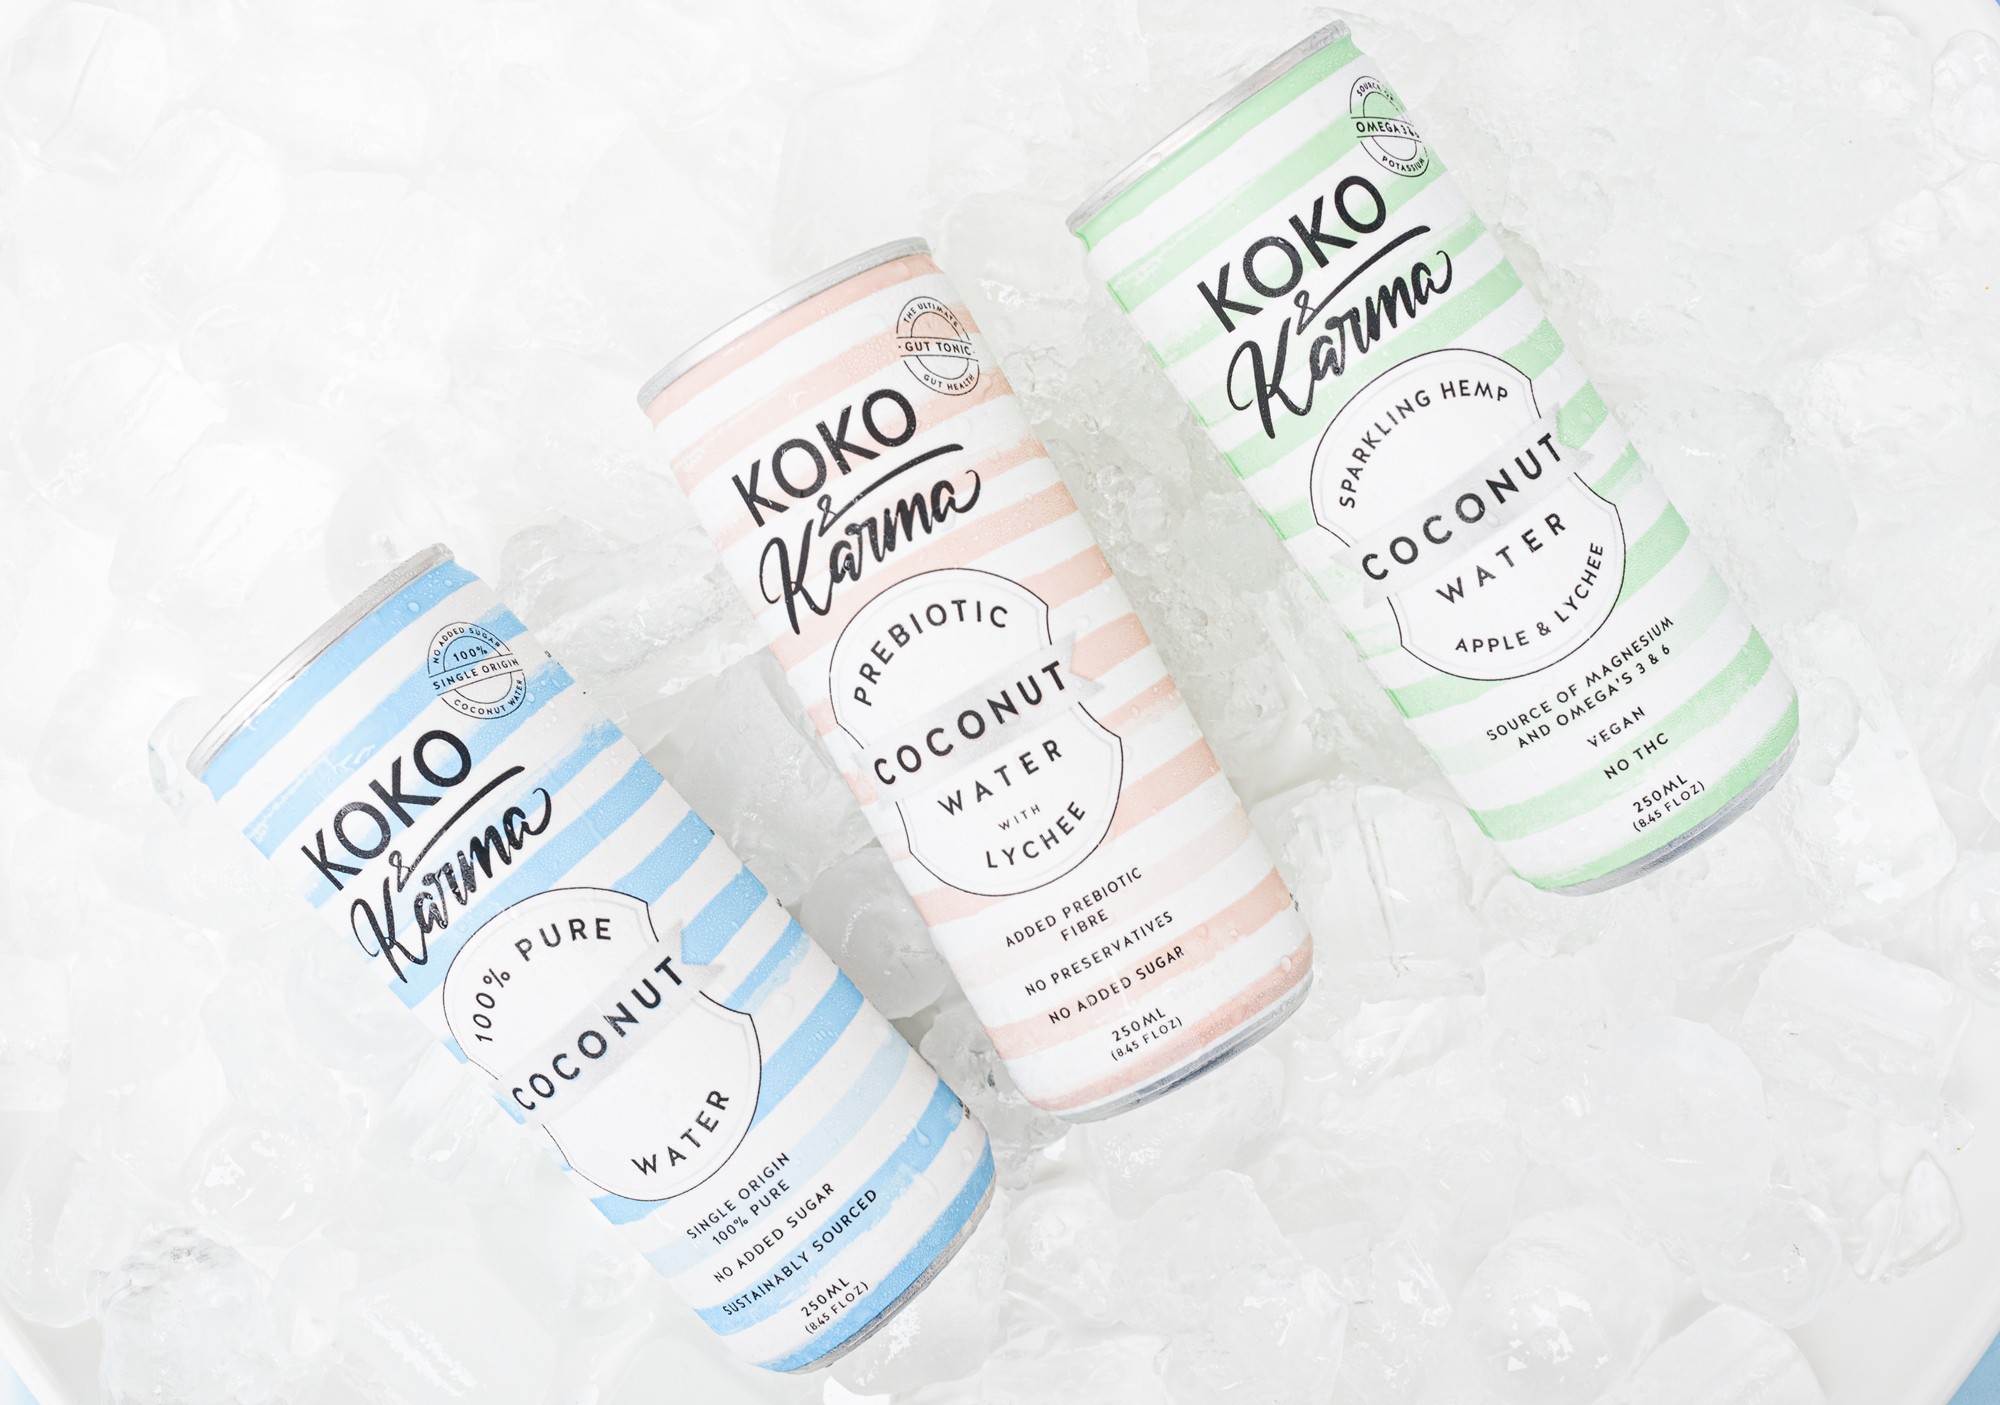 Koko & Karma: Taste This Coconut Water Infused With Superfoods